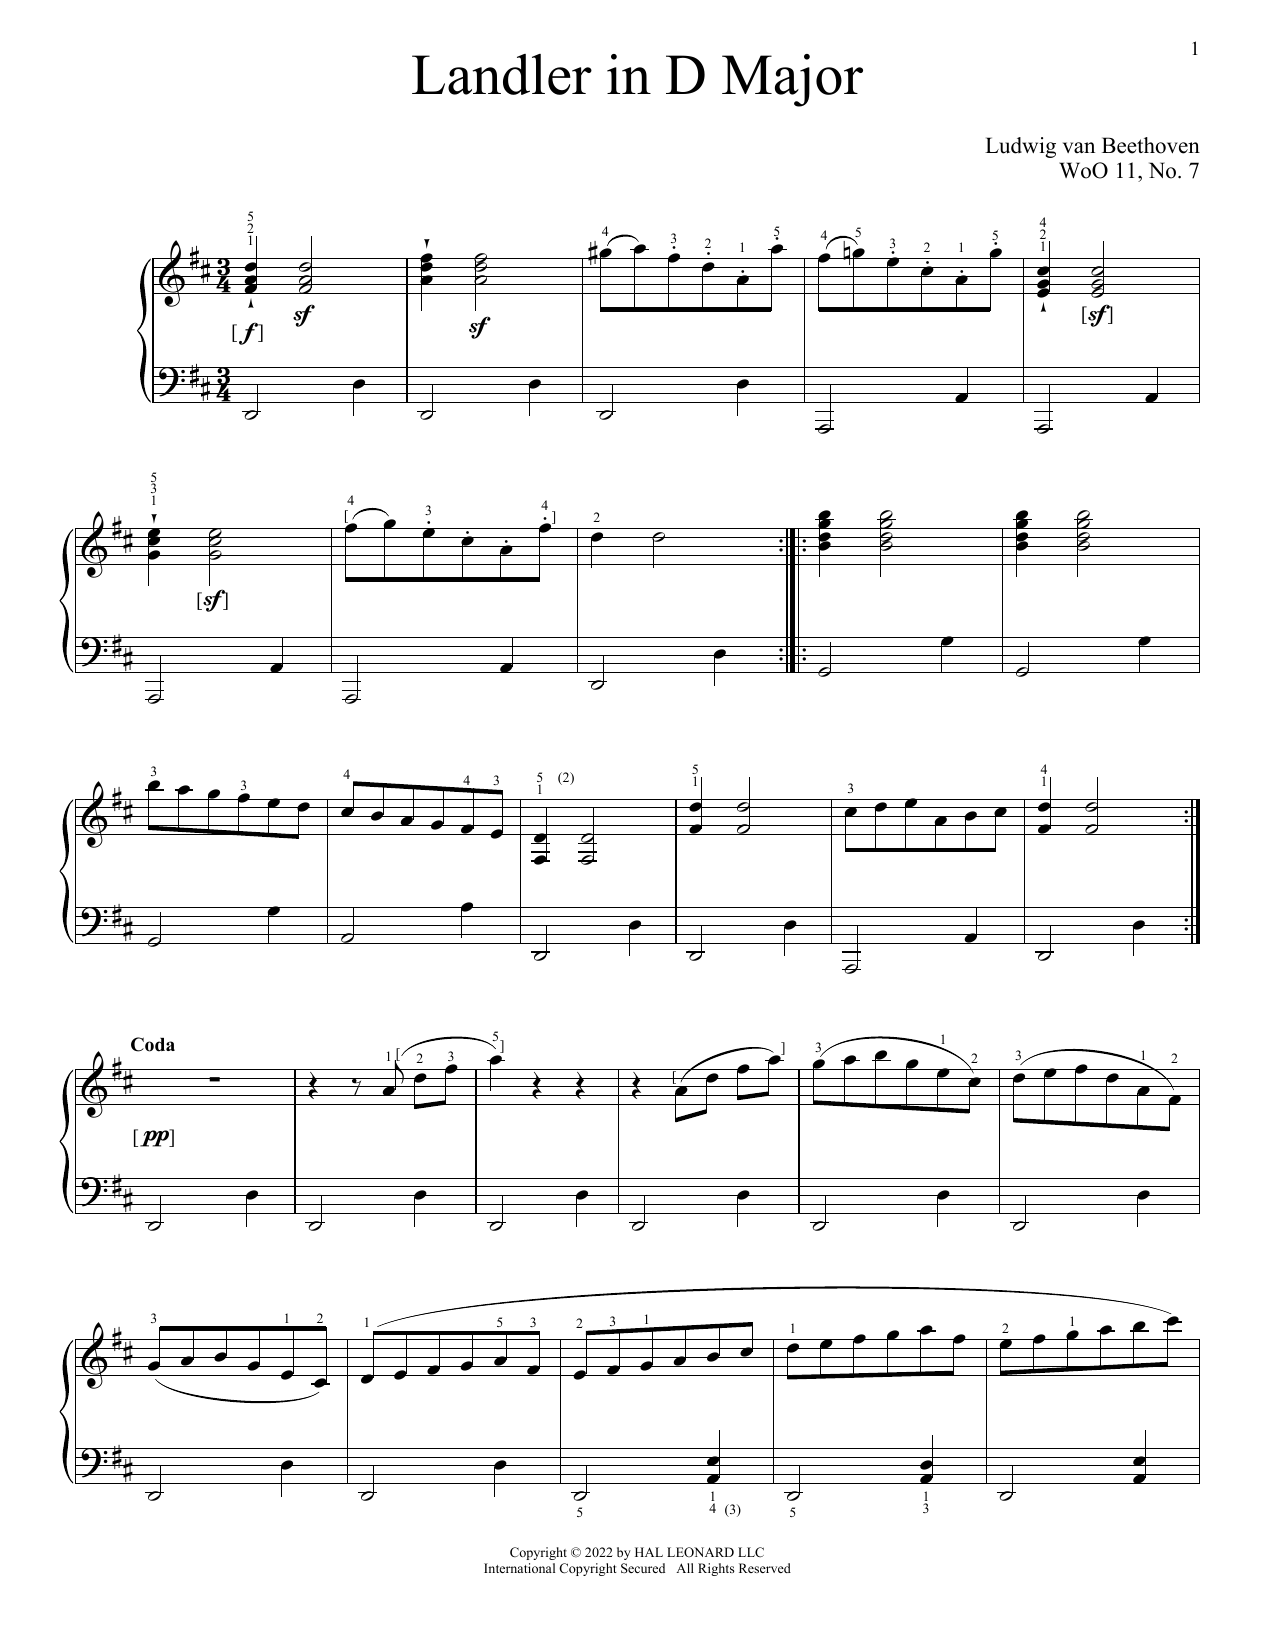 Download Ludwig van Beethoven Landler In D Major, WoO 11, No. 7 Sheet Music